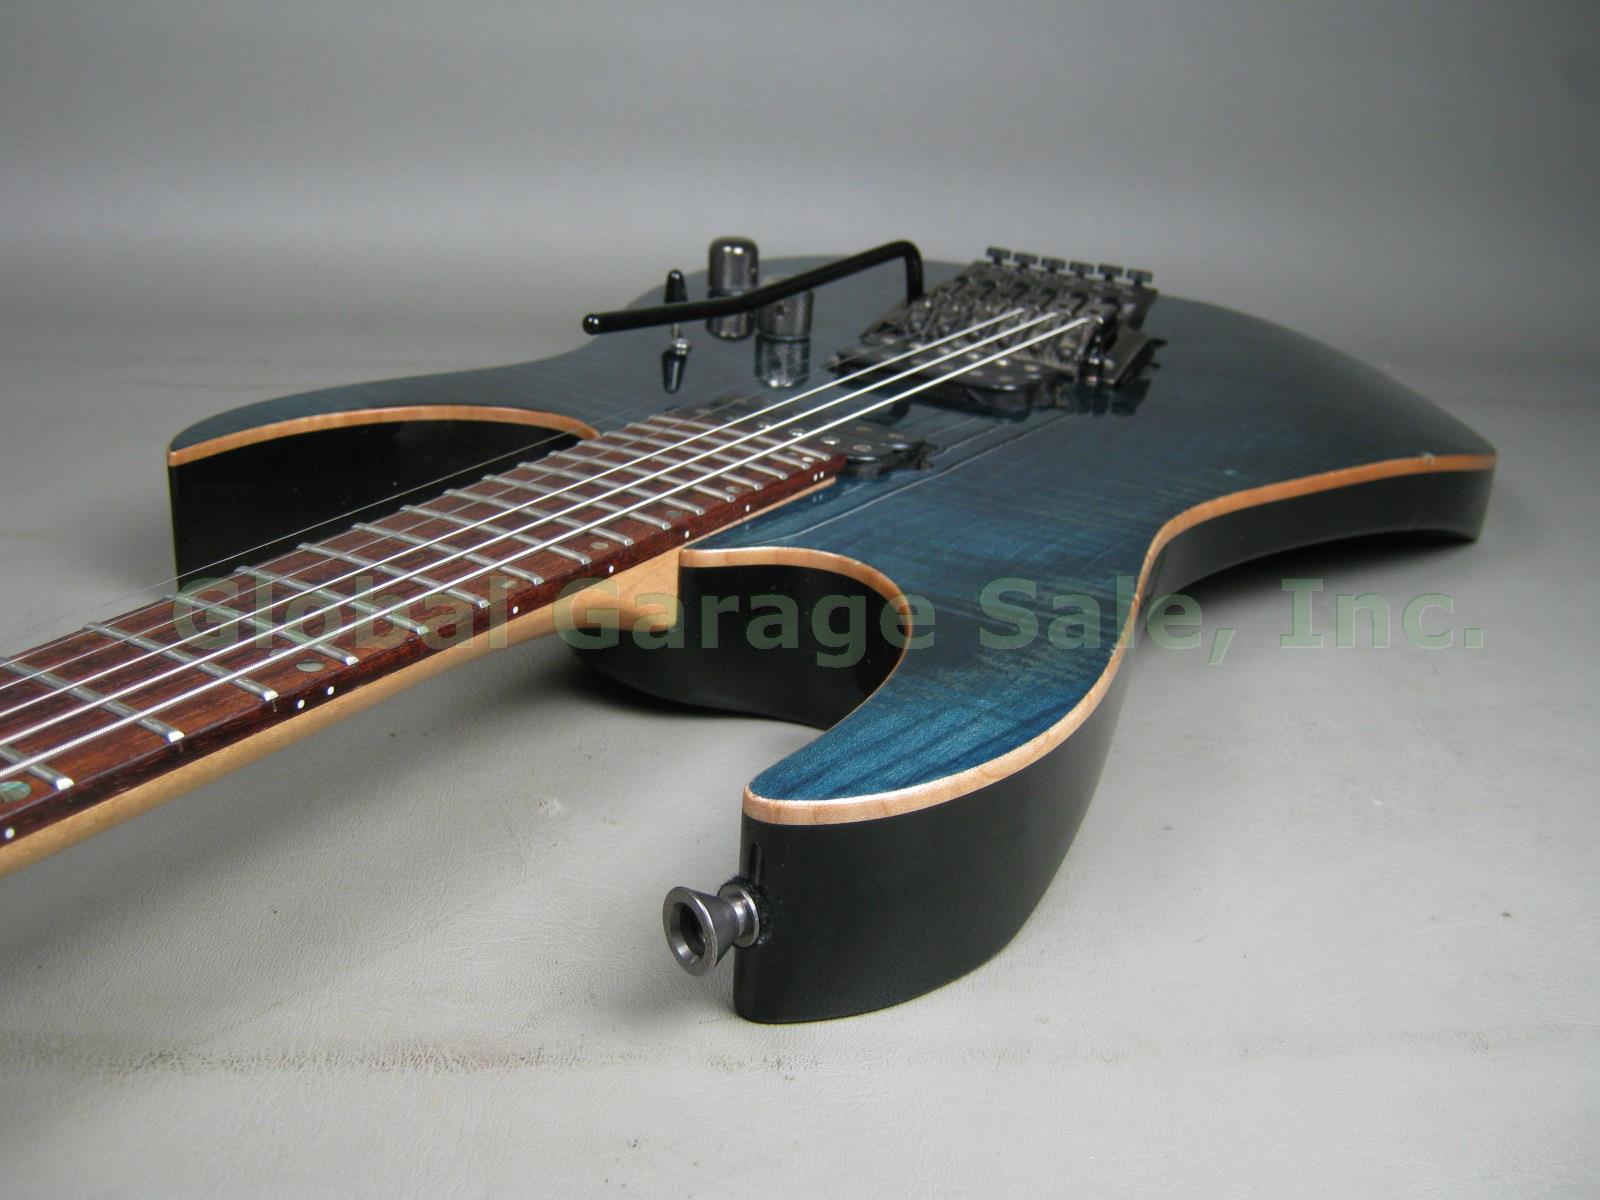 1999 Ibanez Prestige RG3120 Electric Guitar Blue Flame Maple Floyd Rose Tremolo 7